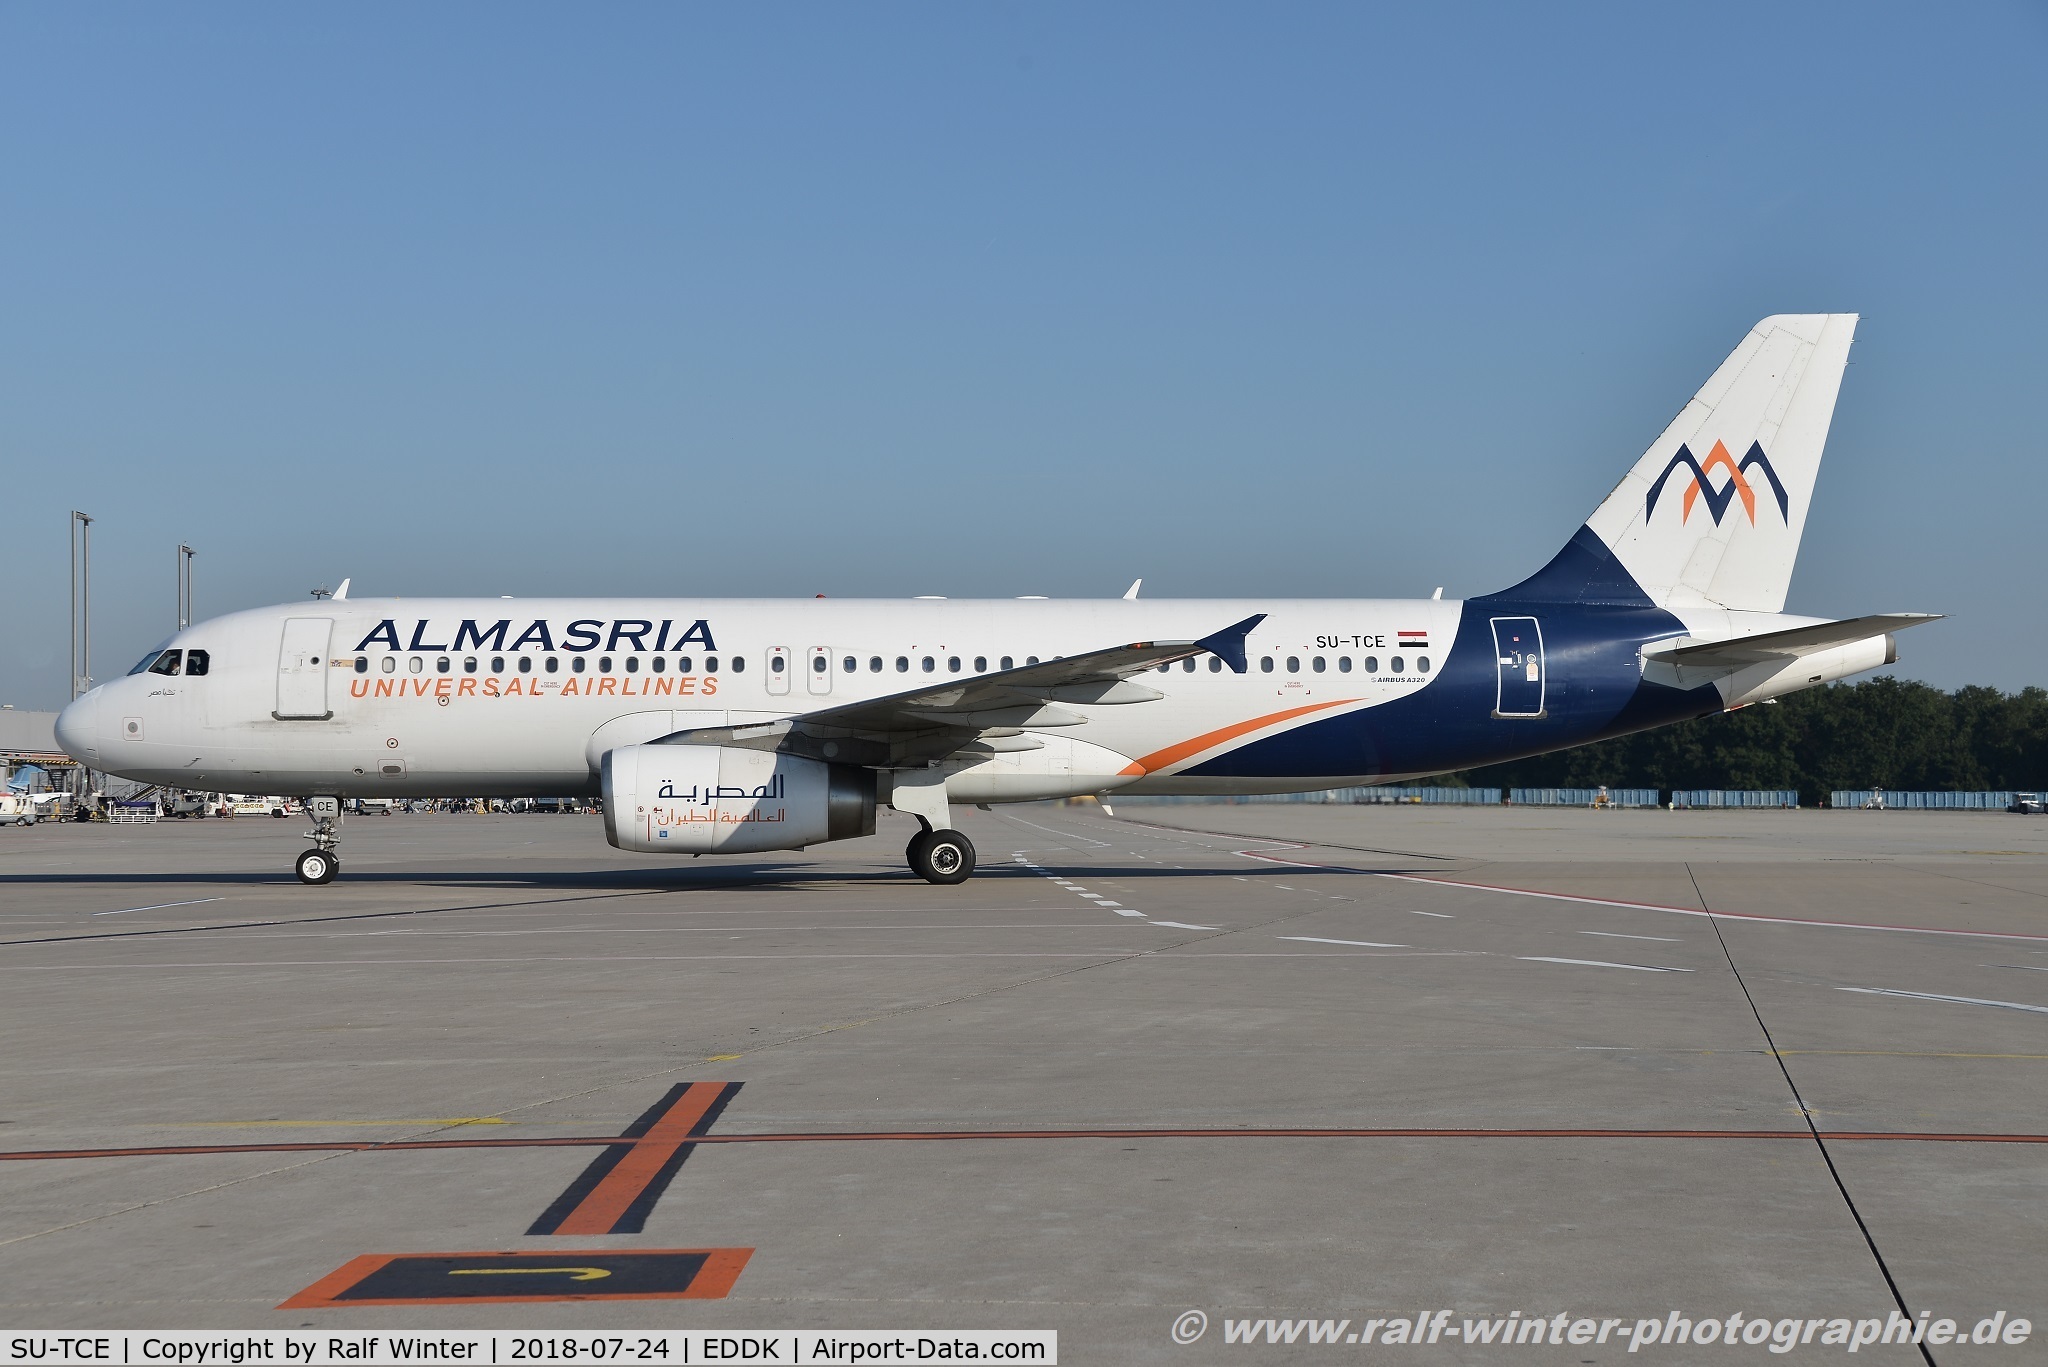 SU-TCE, 1999 Airbus A320-232 C/N 0977, Airbus A320-232 - UJ LMU AlMasria Universal Airlines - 977 - SU-TCE - 24.07.2018 - CGN